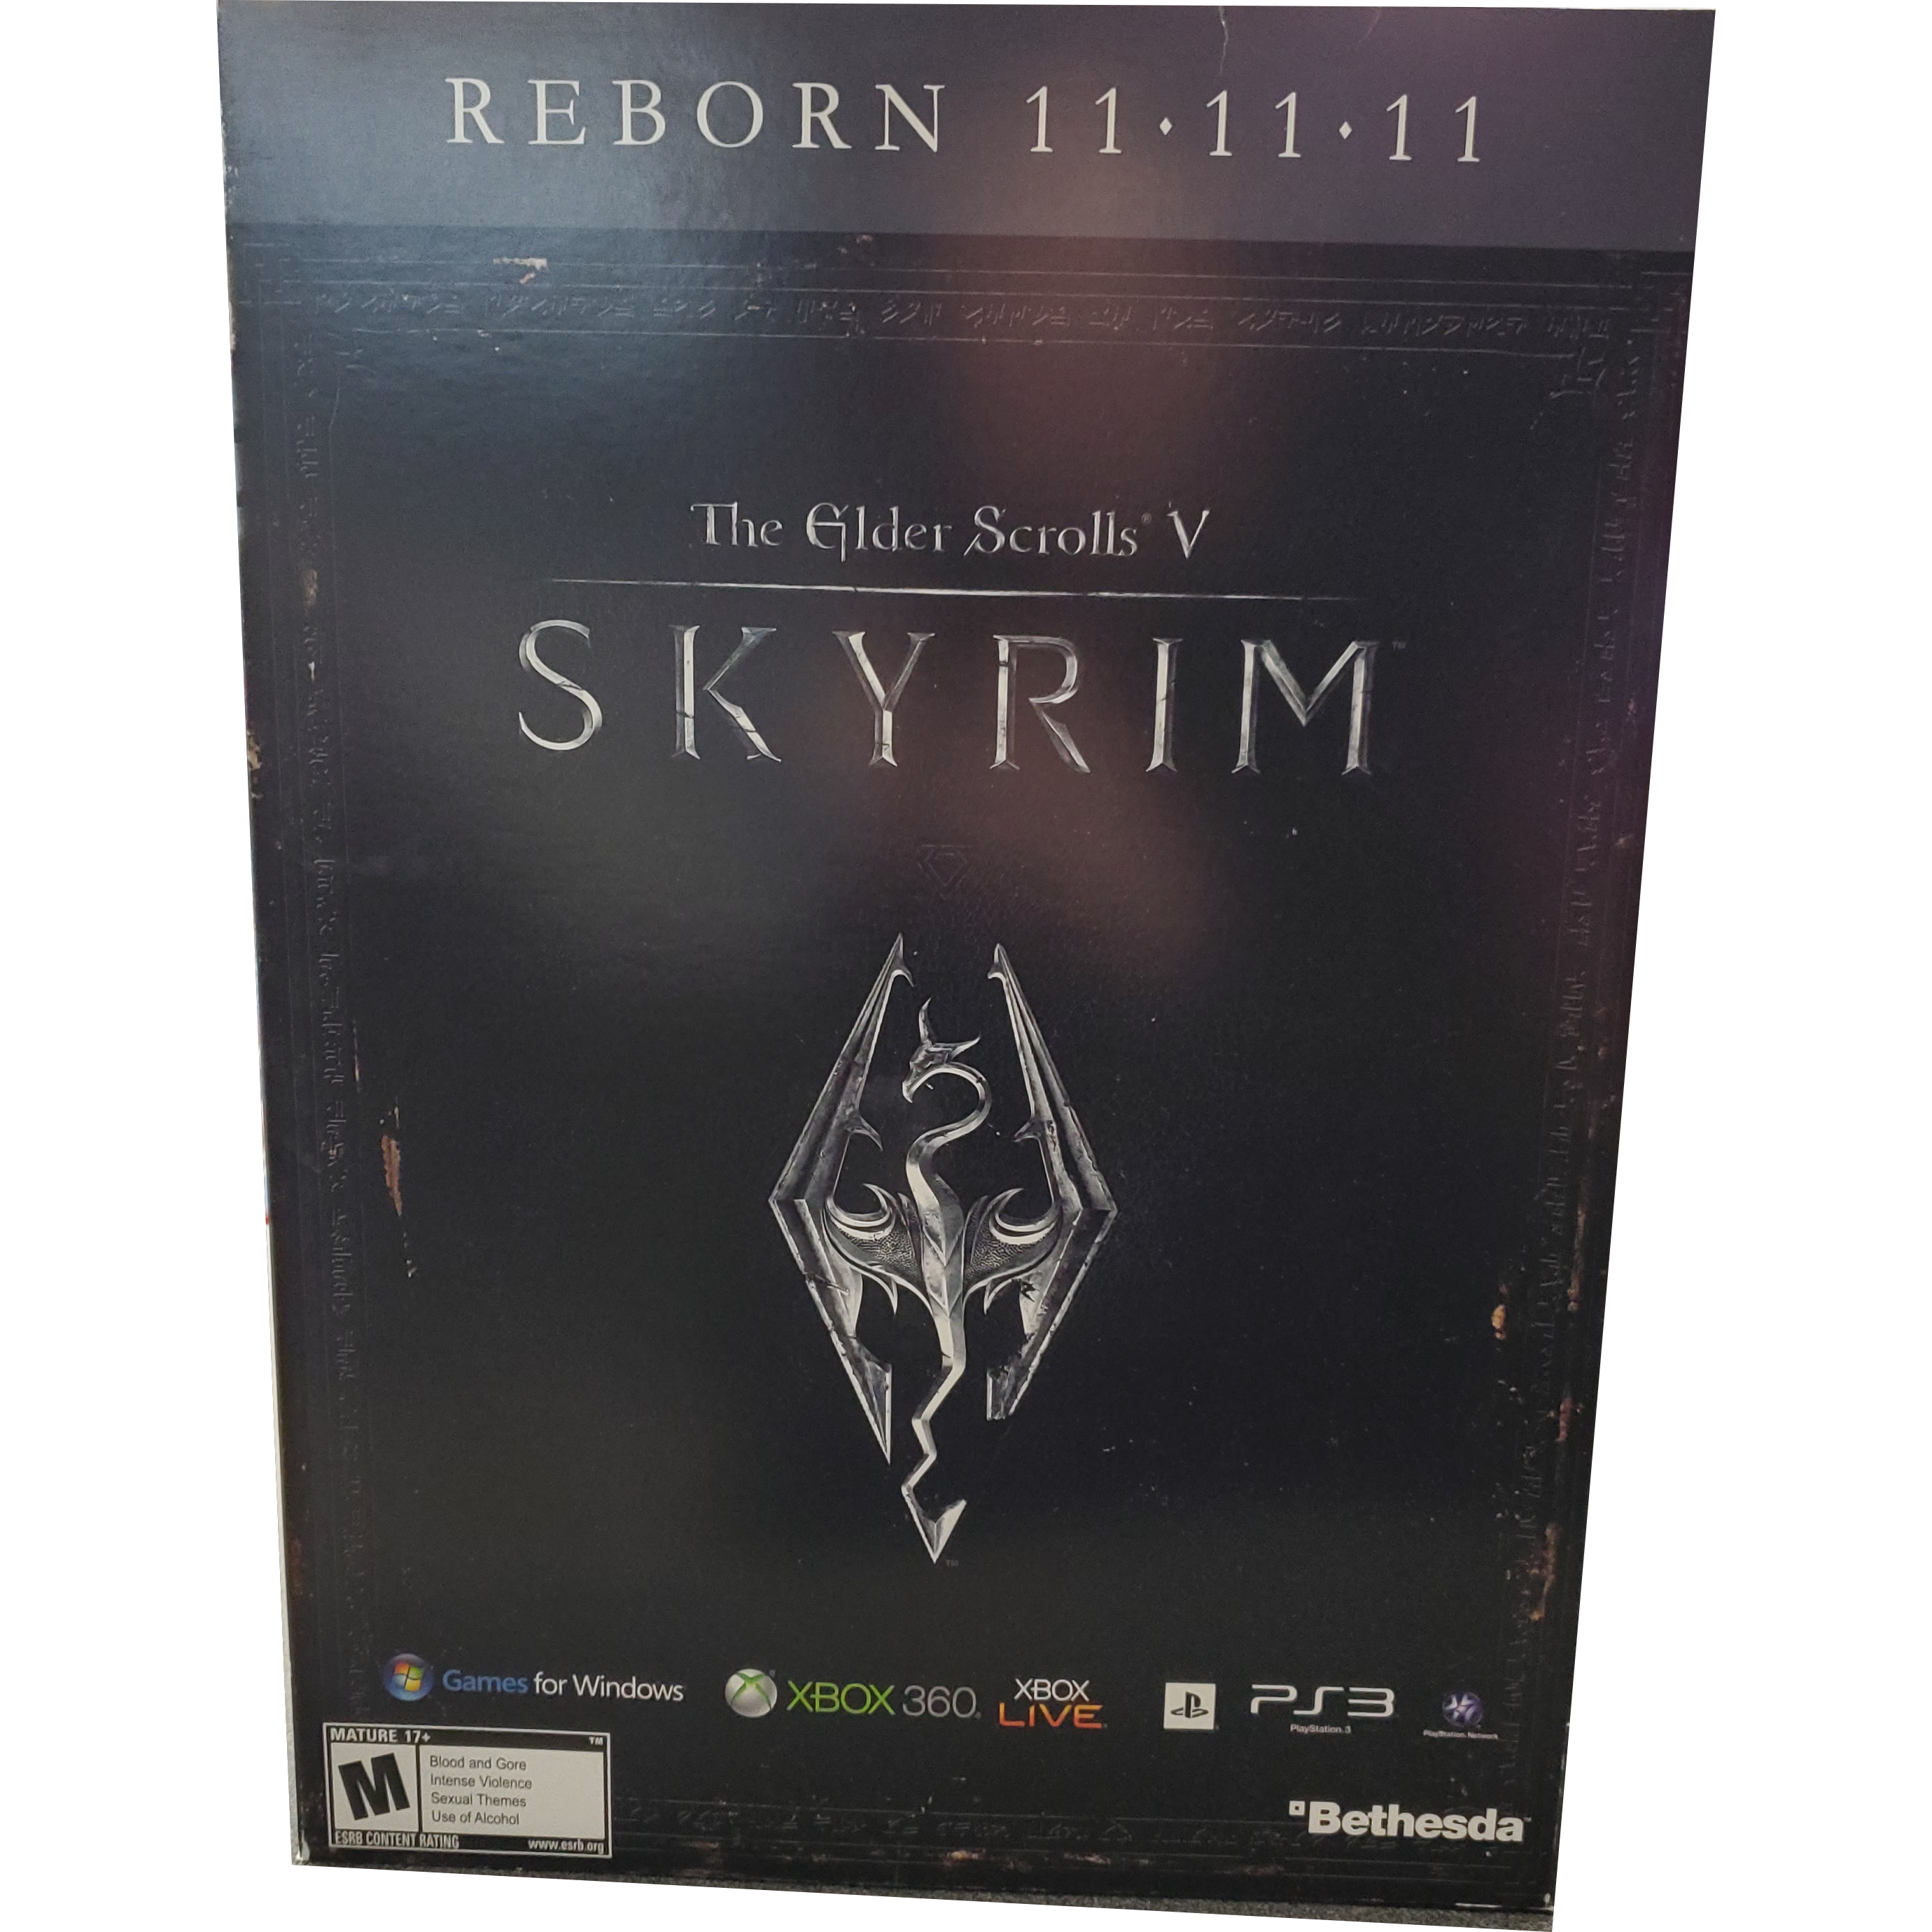 XBOX 360 - The Elder Scrolls V Skyrim Collector's Edition (grande boîte de vente au détail)